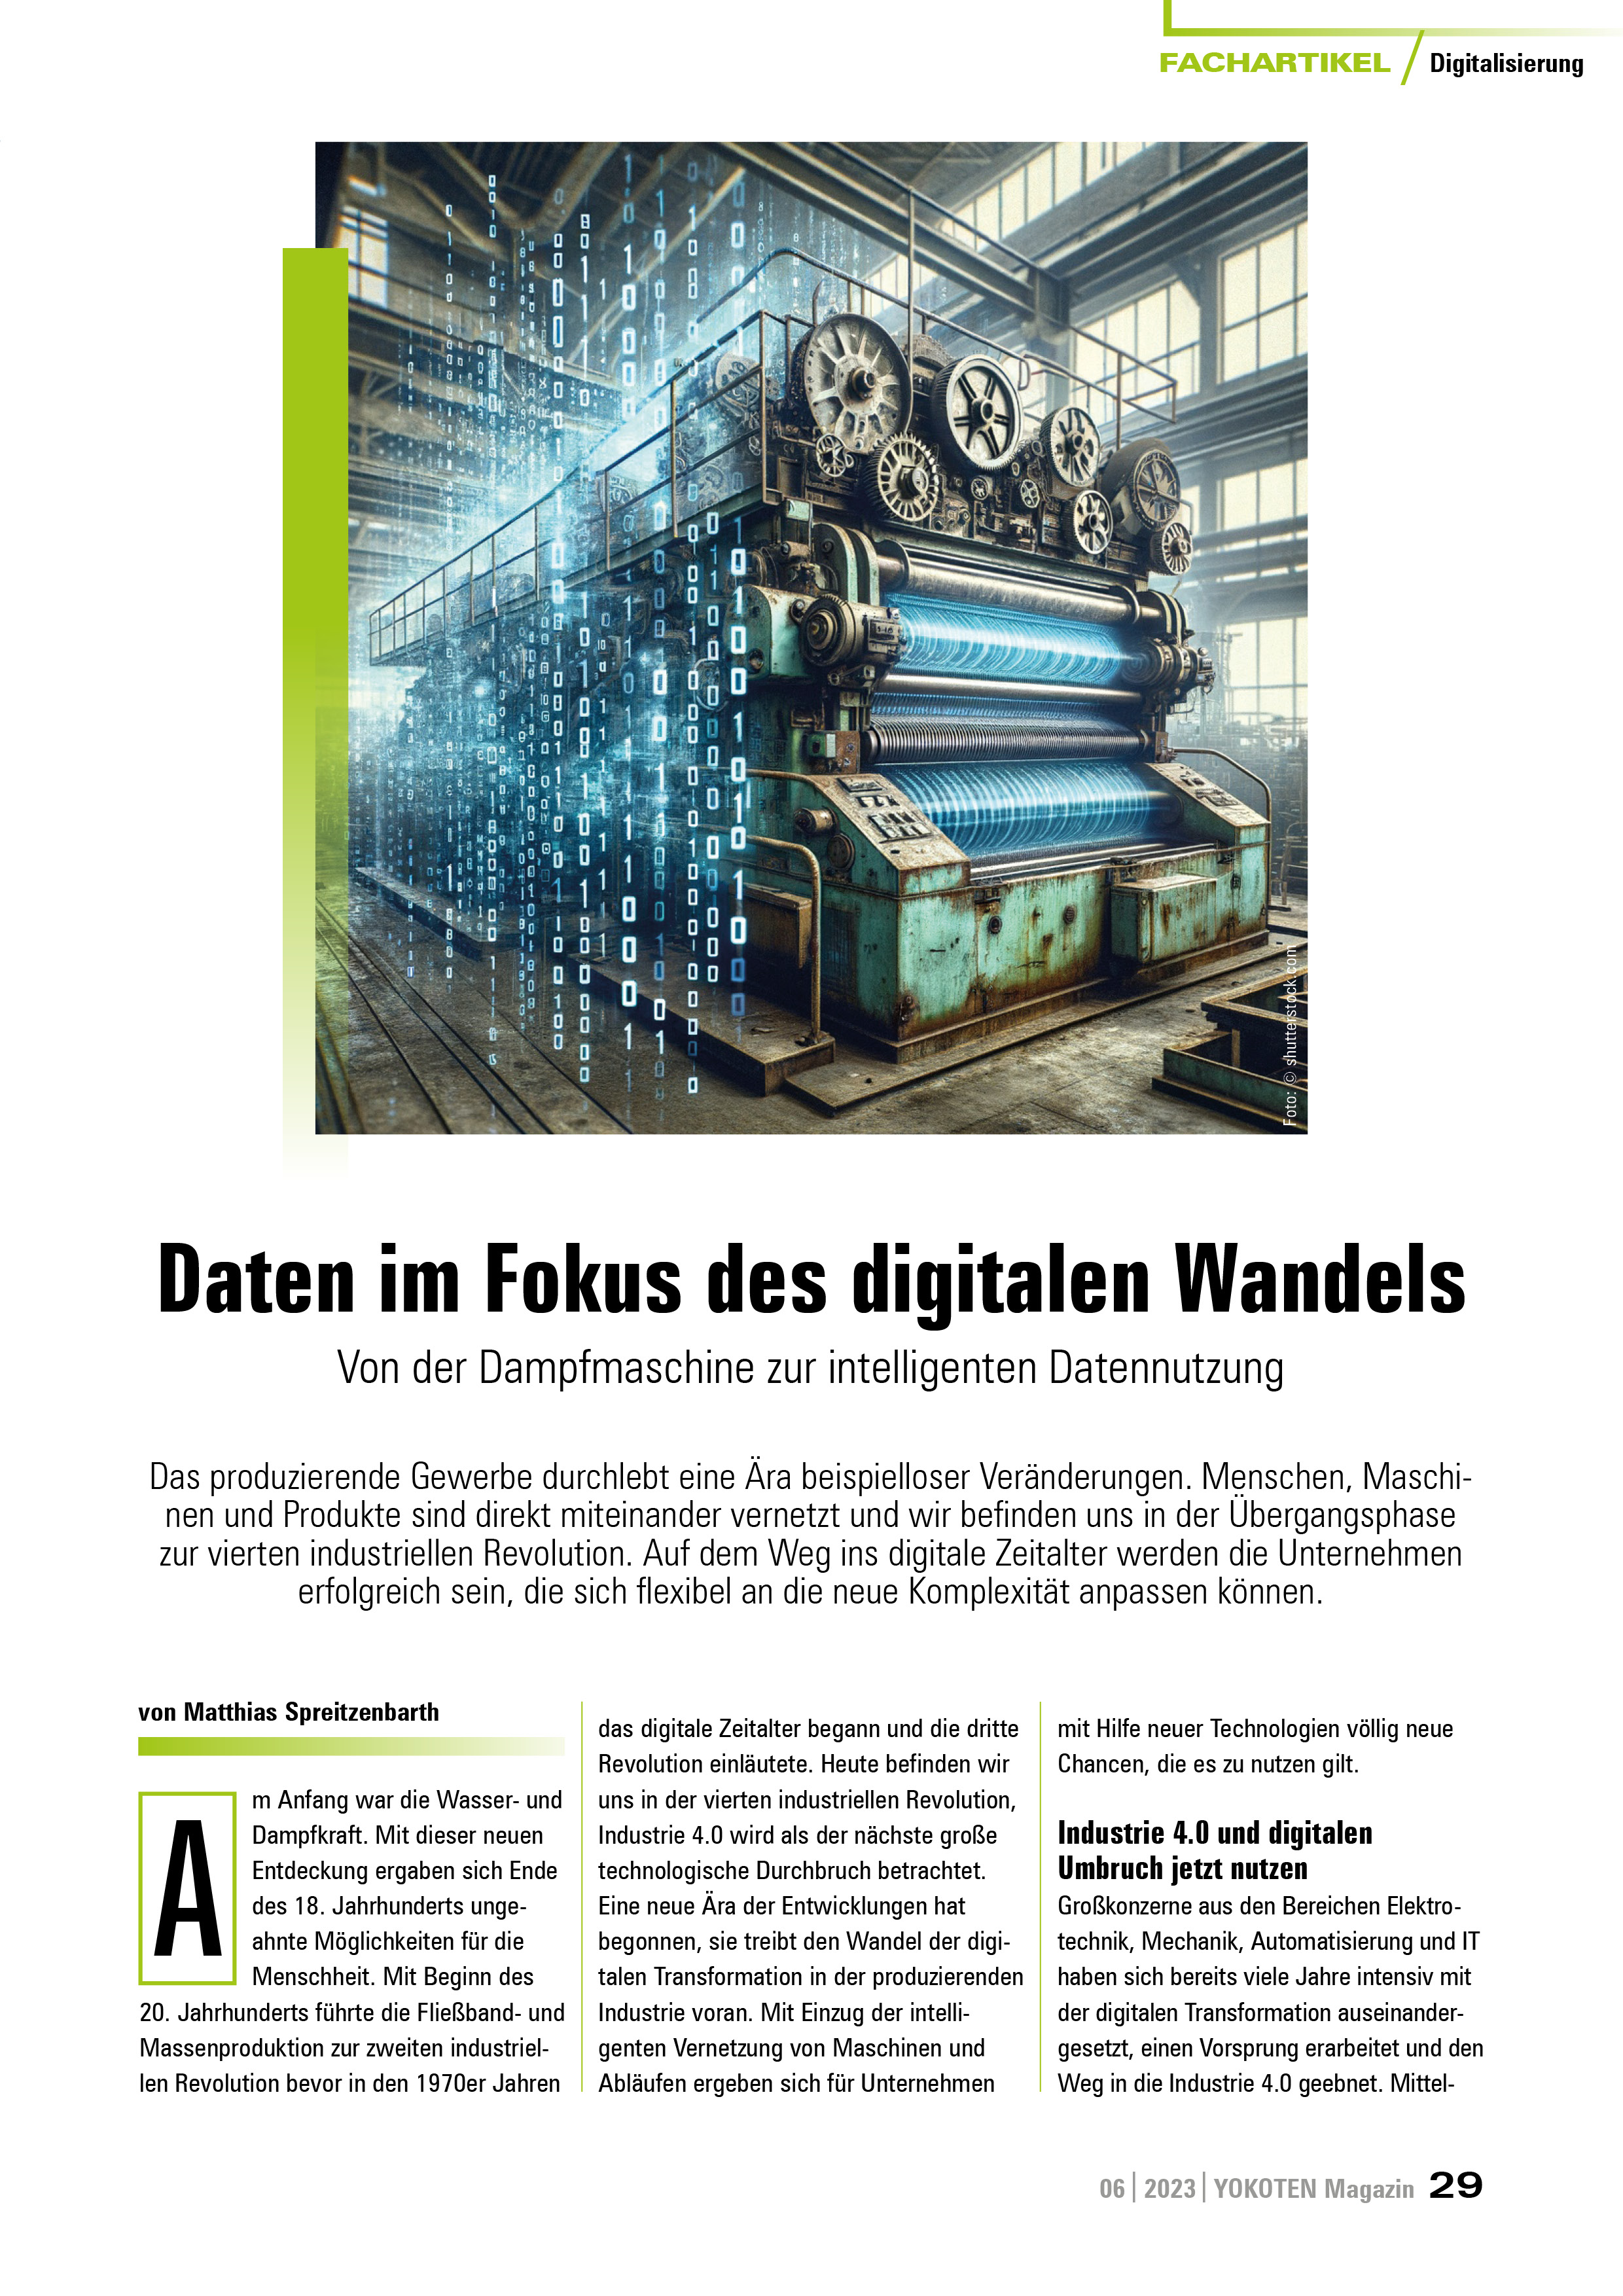 Daten im Fokus des digitalen Wandels - Artikel aus Fachmagazin YOKOTEN 2023-06